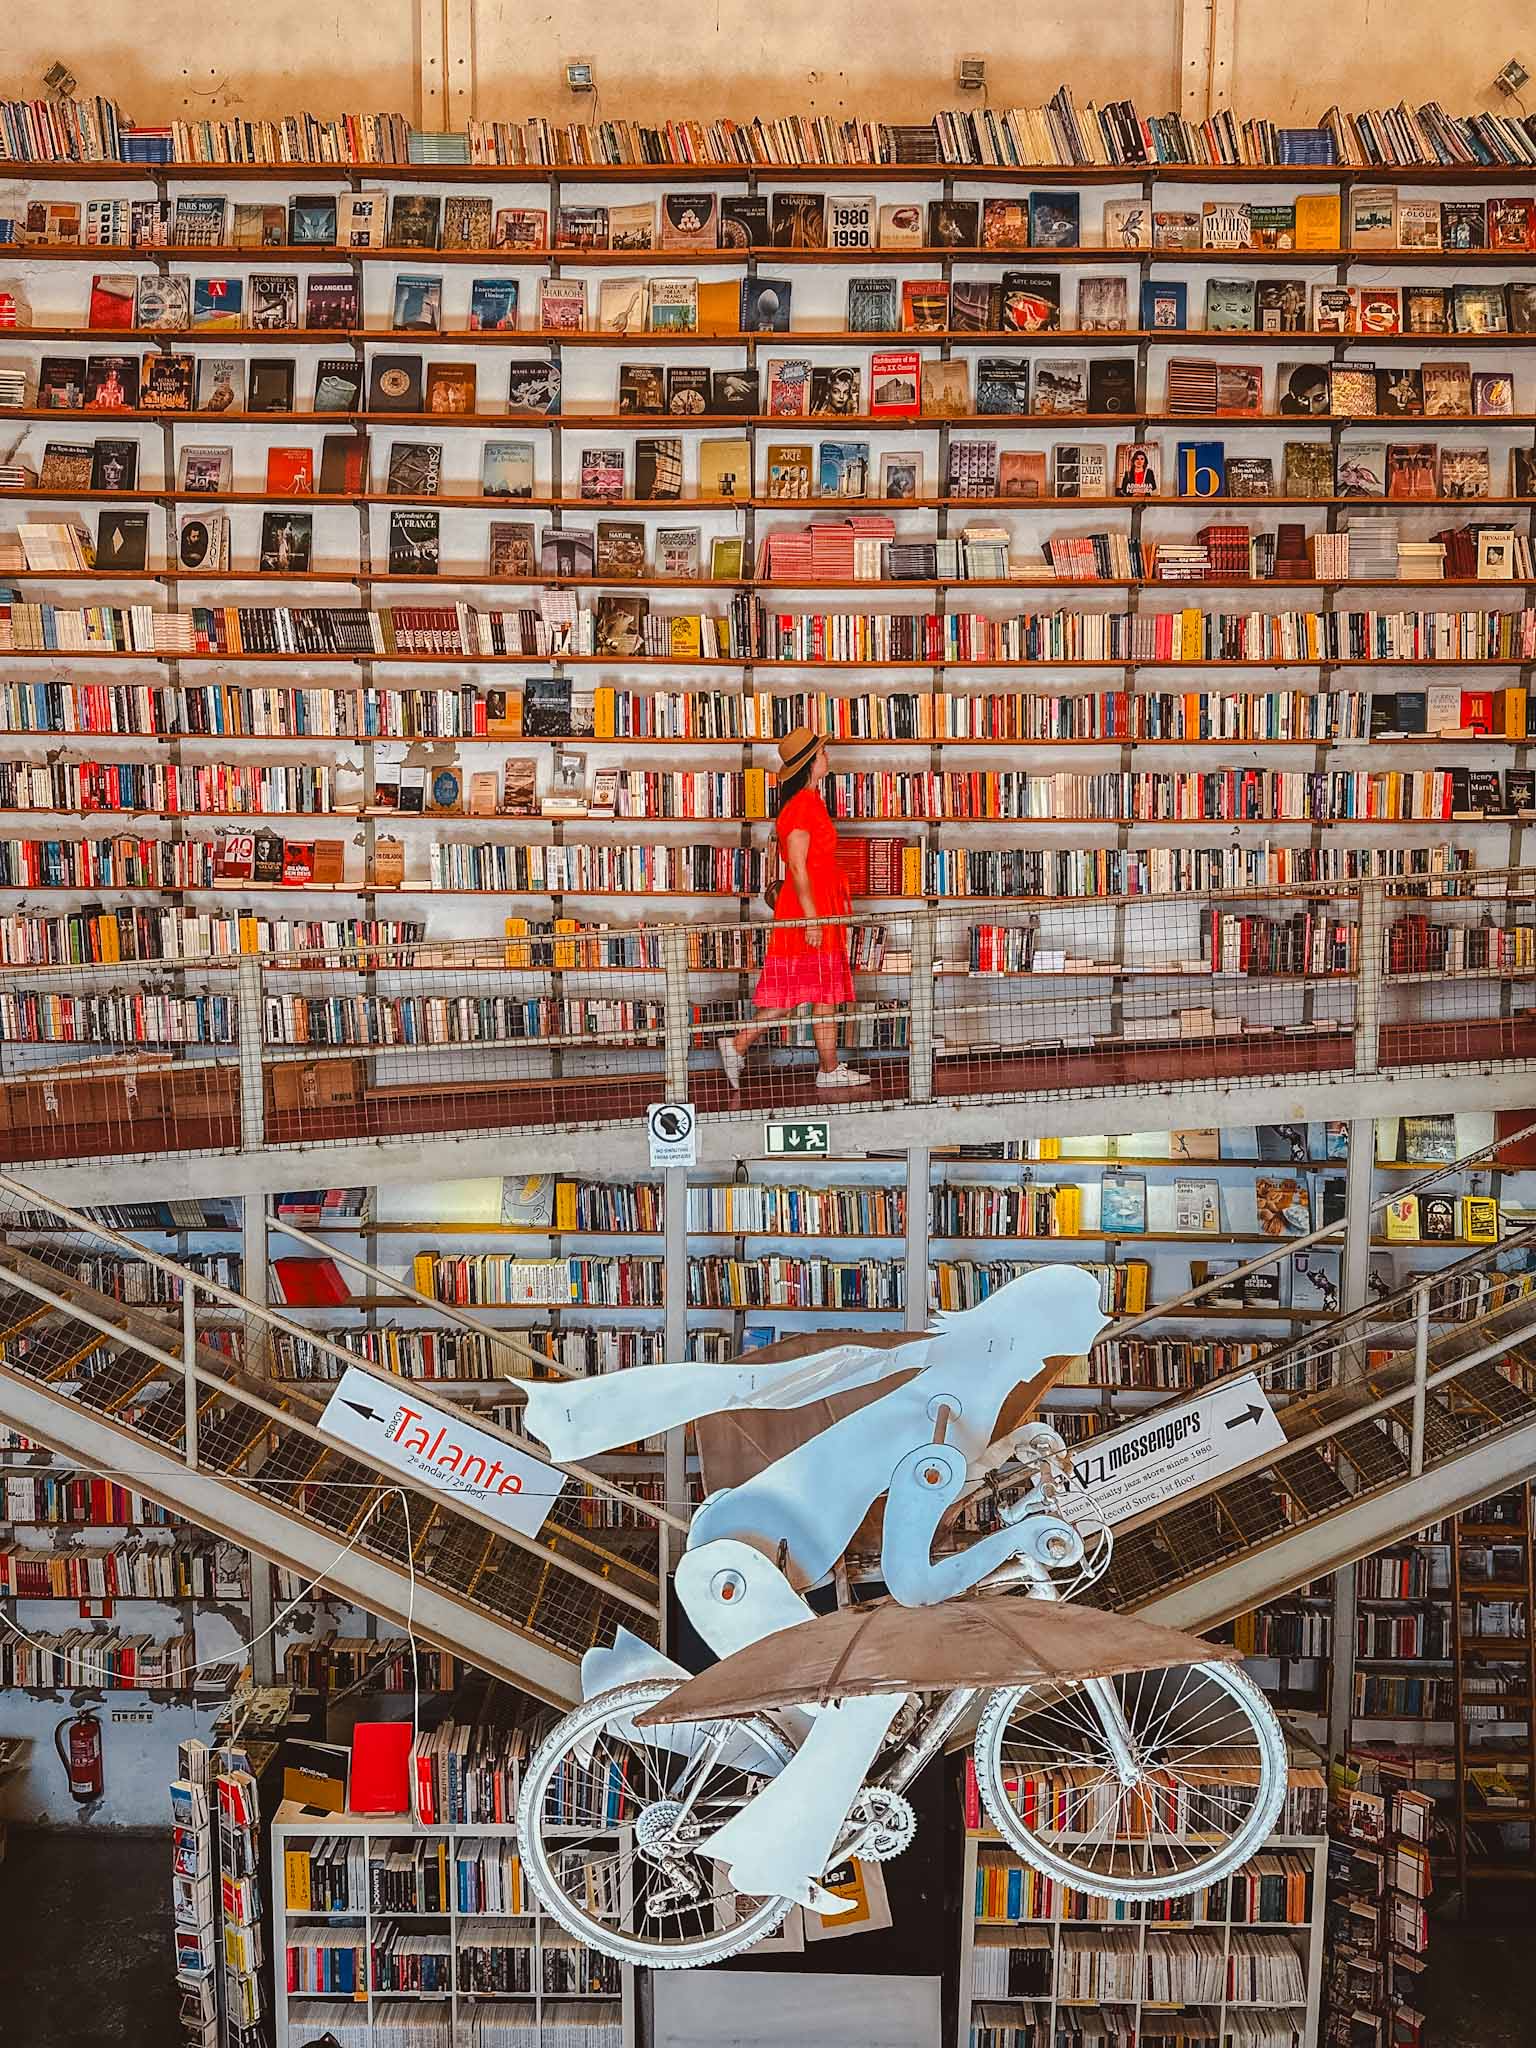 Best Instagram photo spots in Lisbon, Portugal - Ler Devagar bookstore in LX Factory